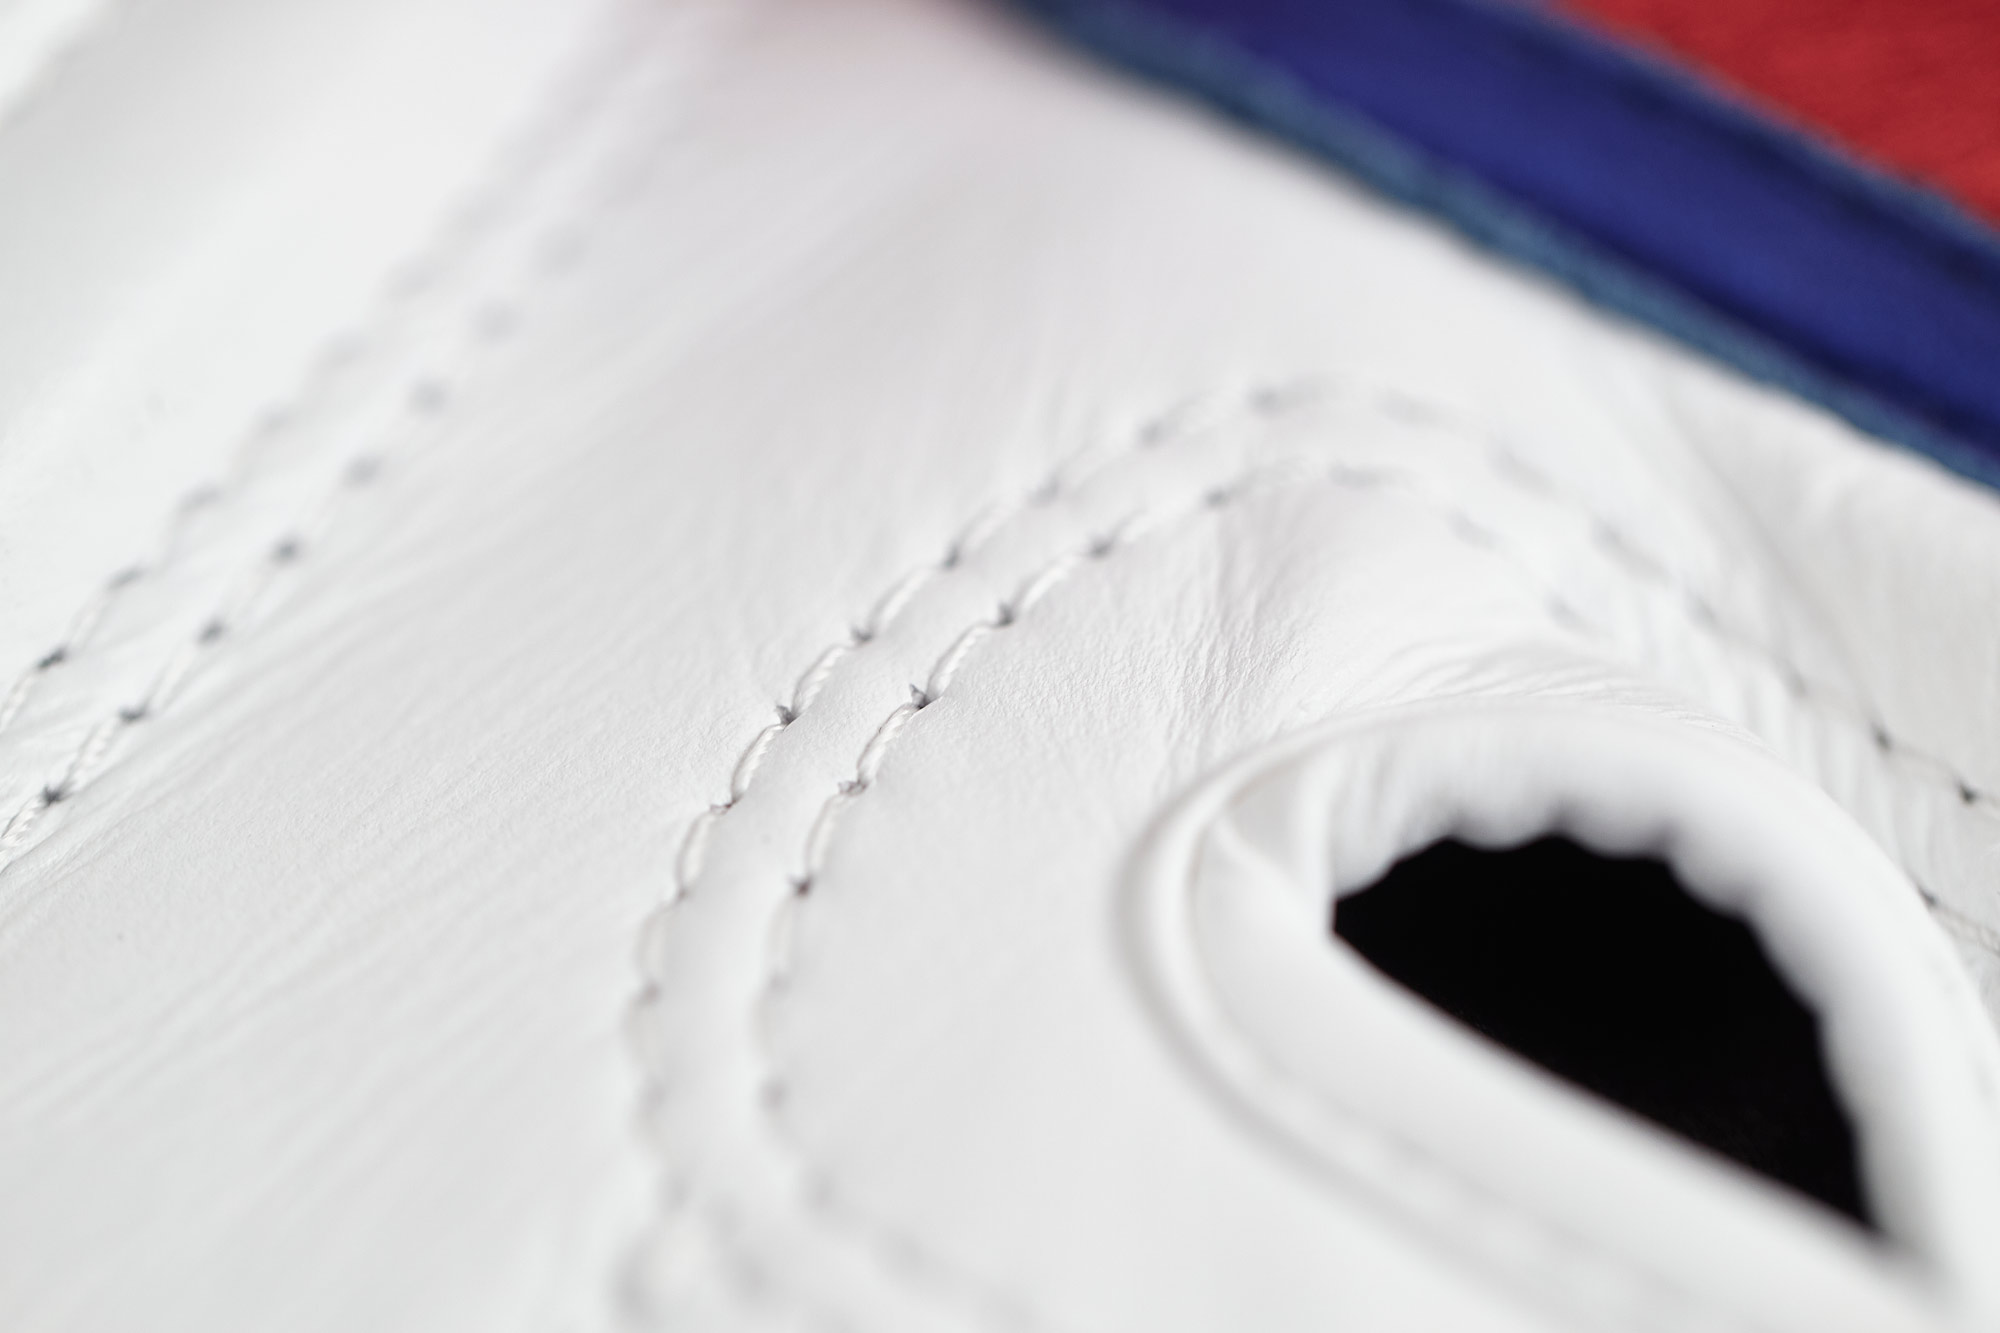 adidas adispeed strap up boxing gloves white/blue/red, ADISBG501PRO